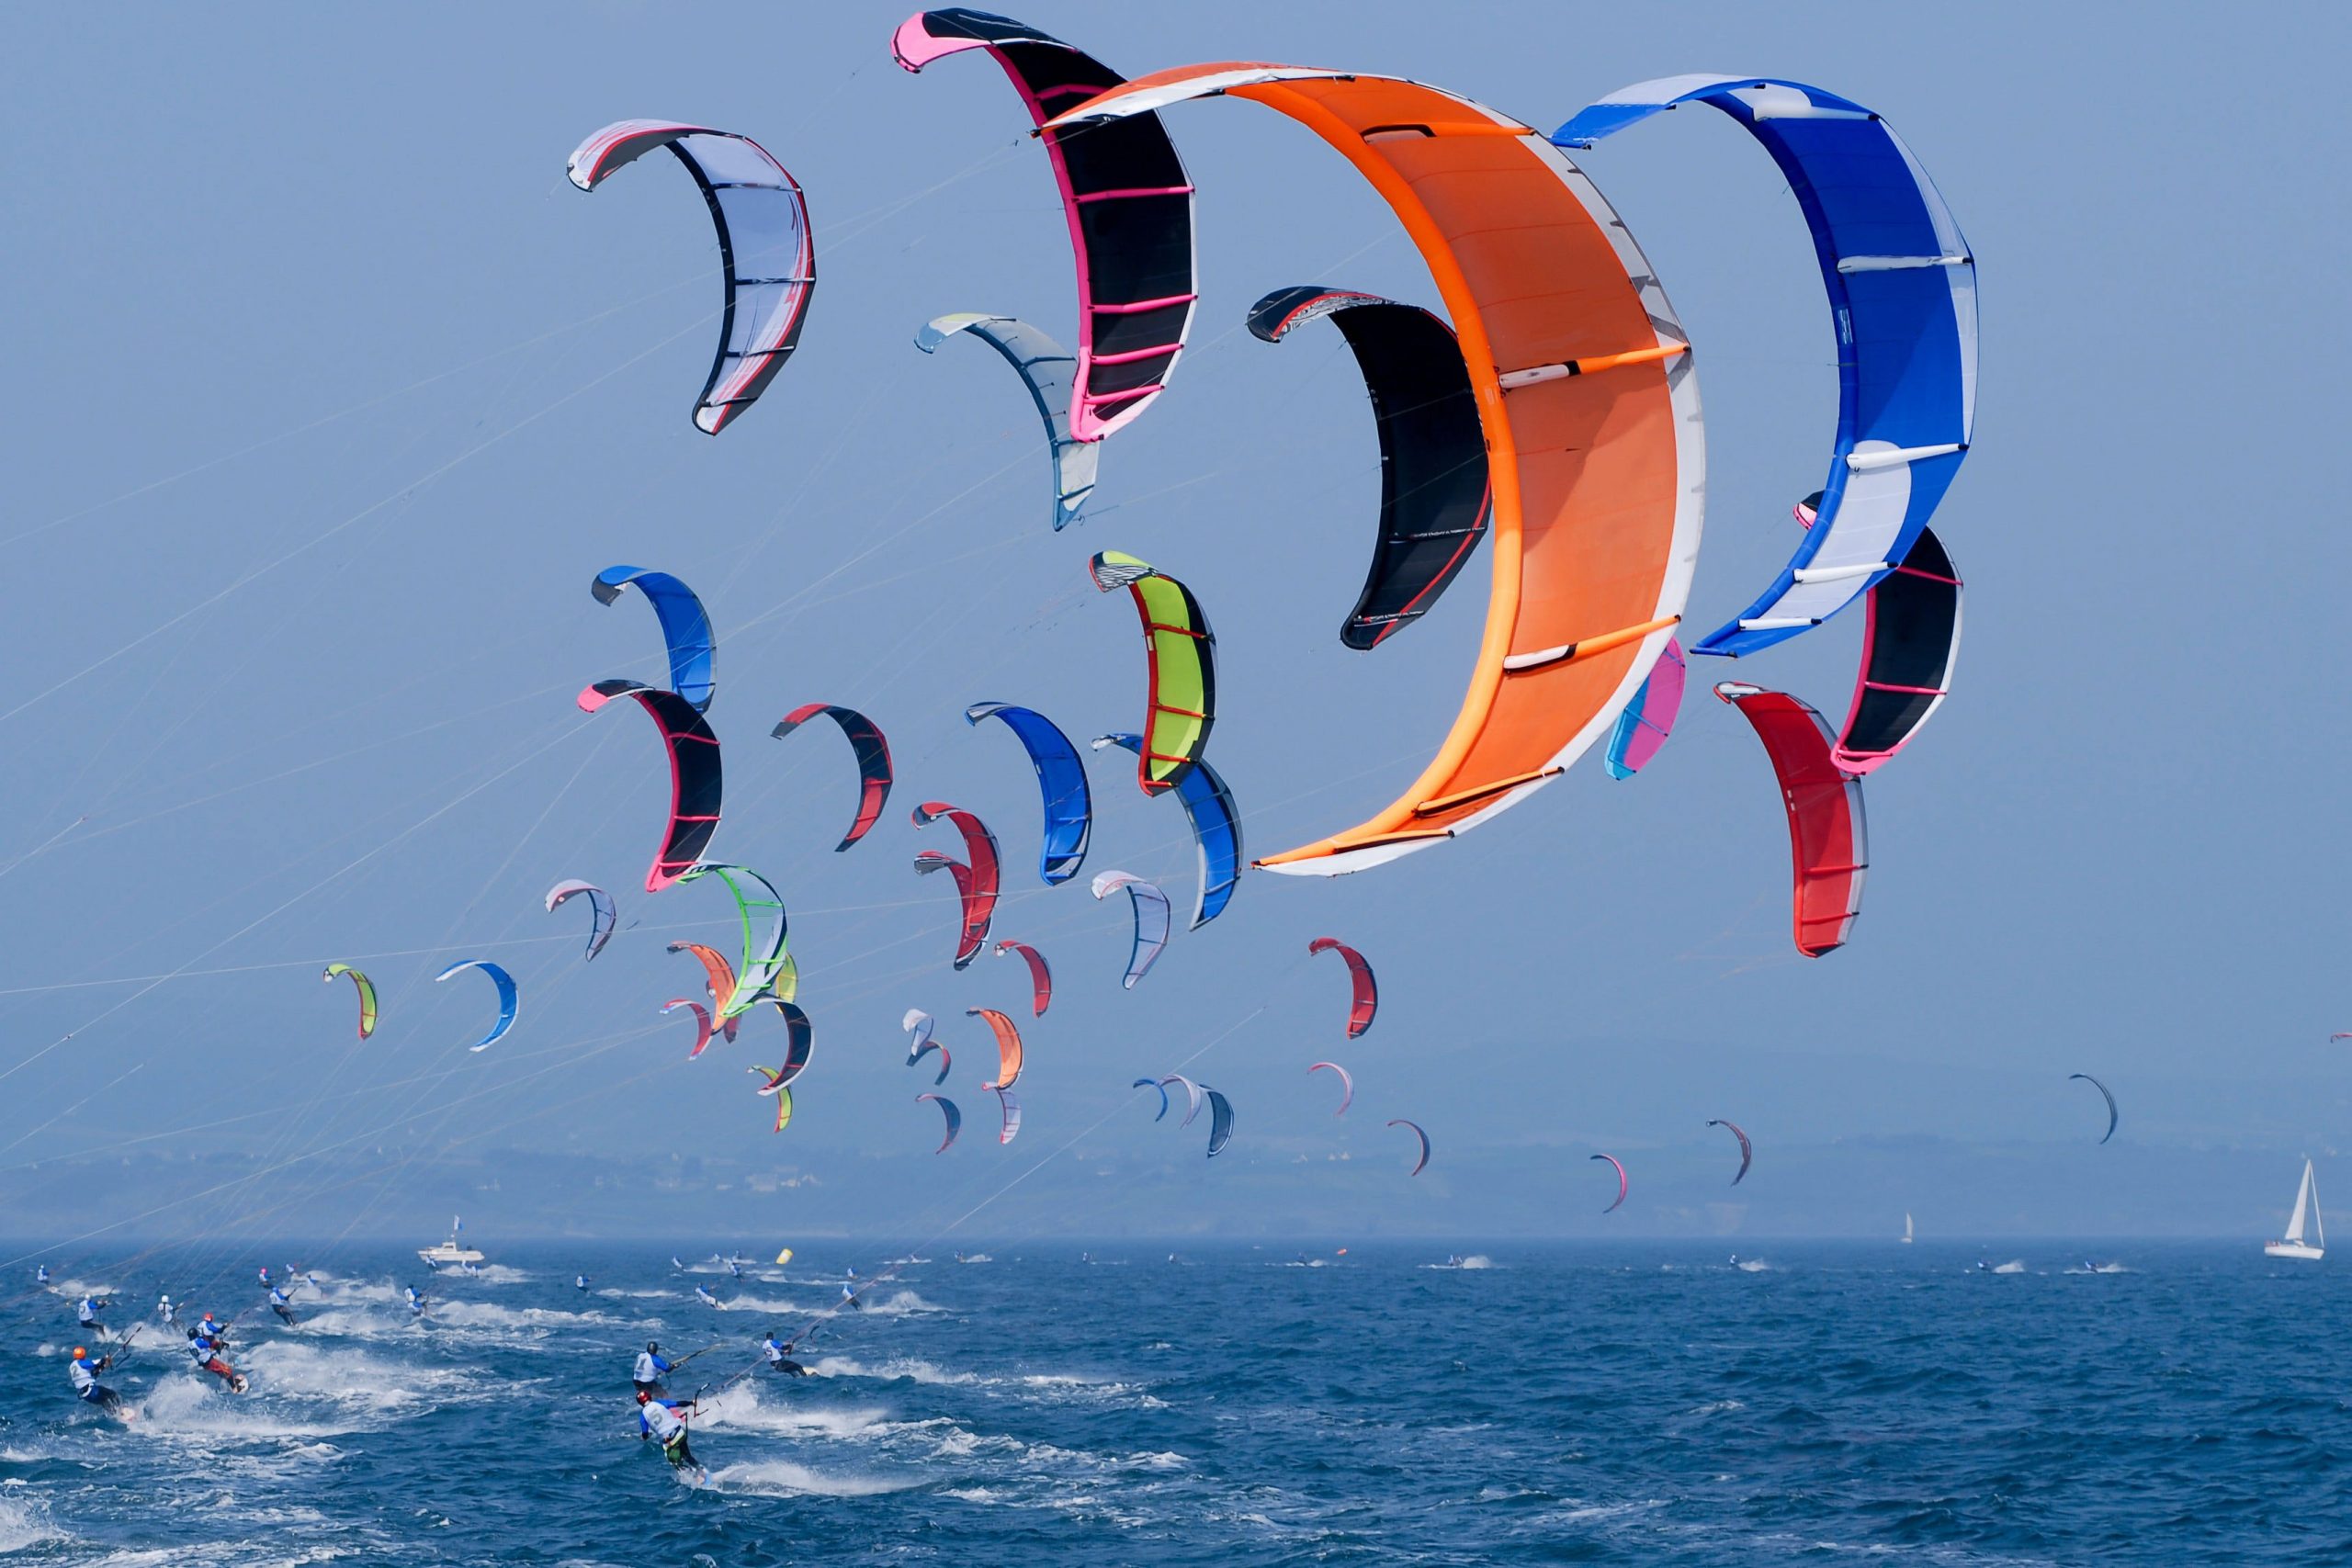 Multicolored kite surfing lot, kitesurfing, sport , sea, water